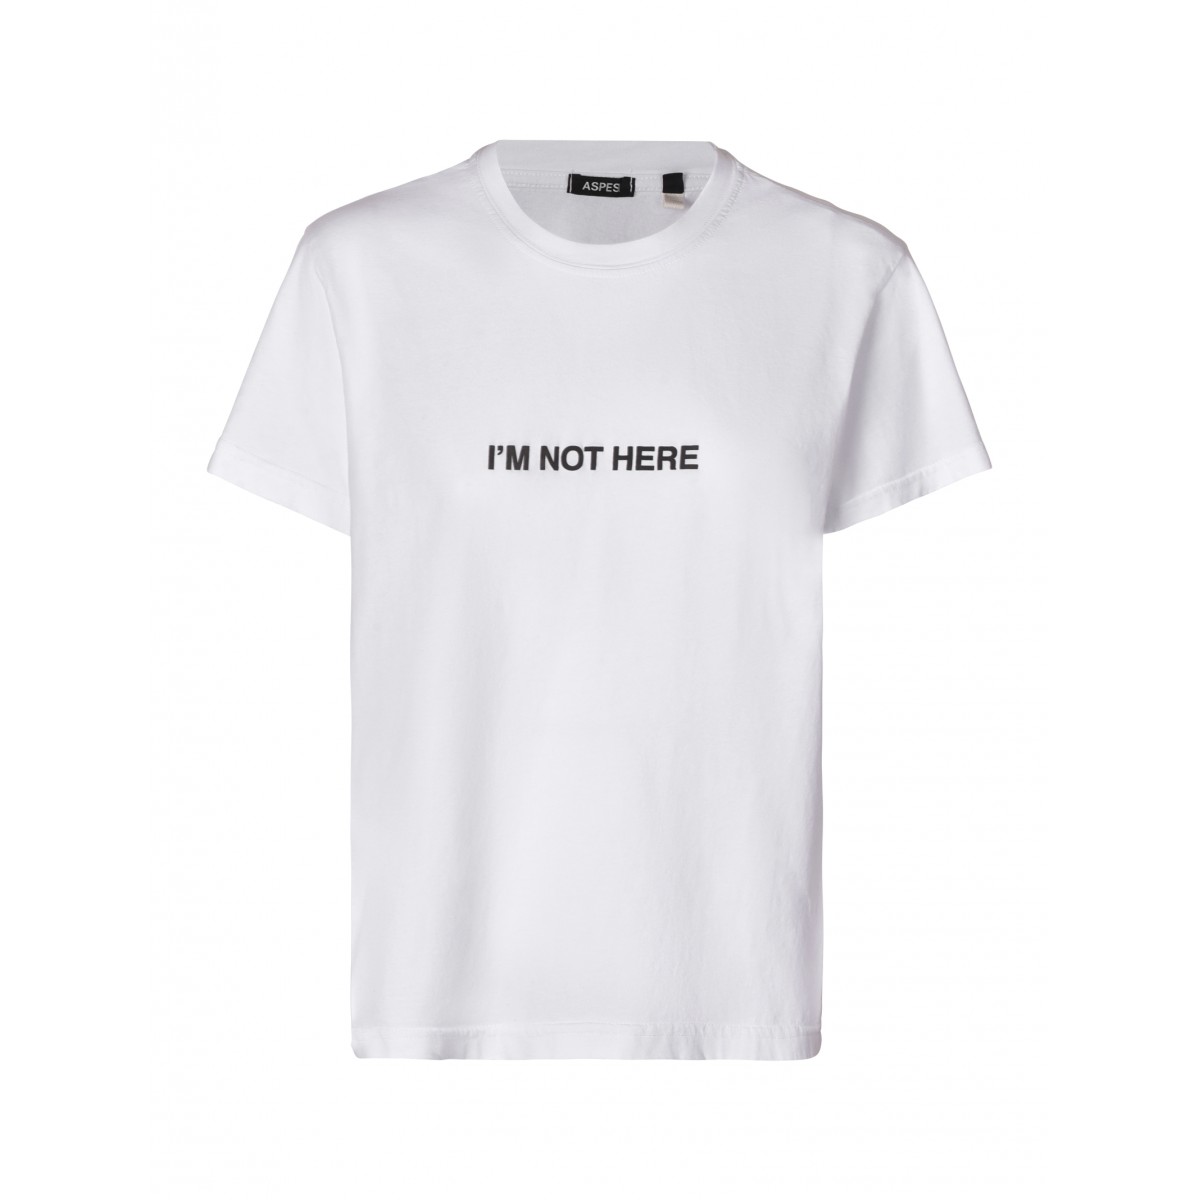 T-shirt i'm not